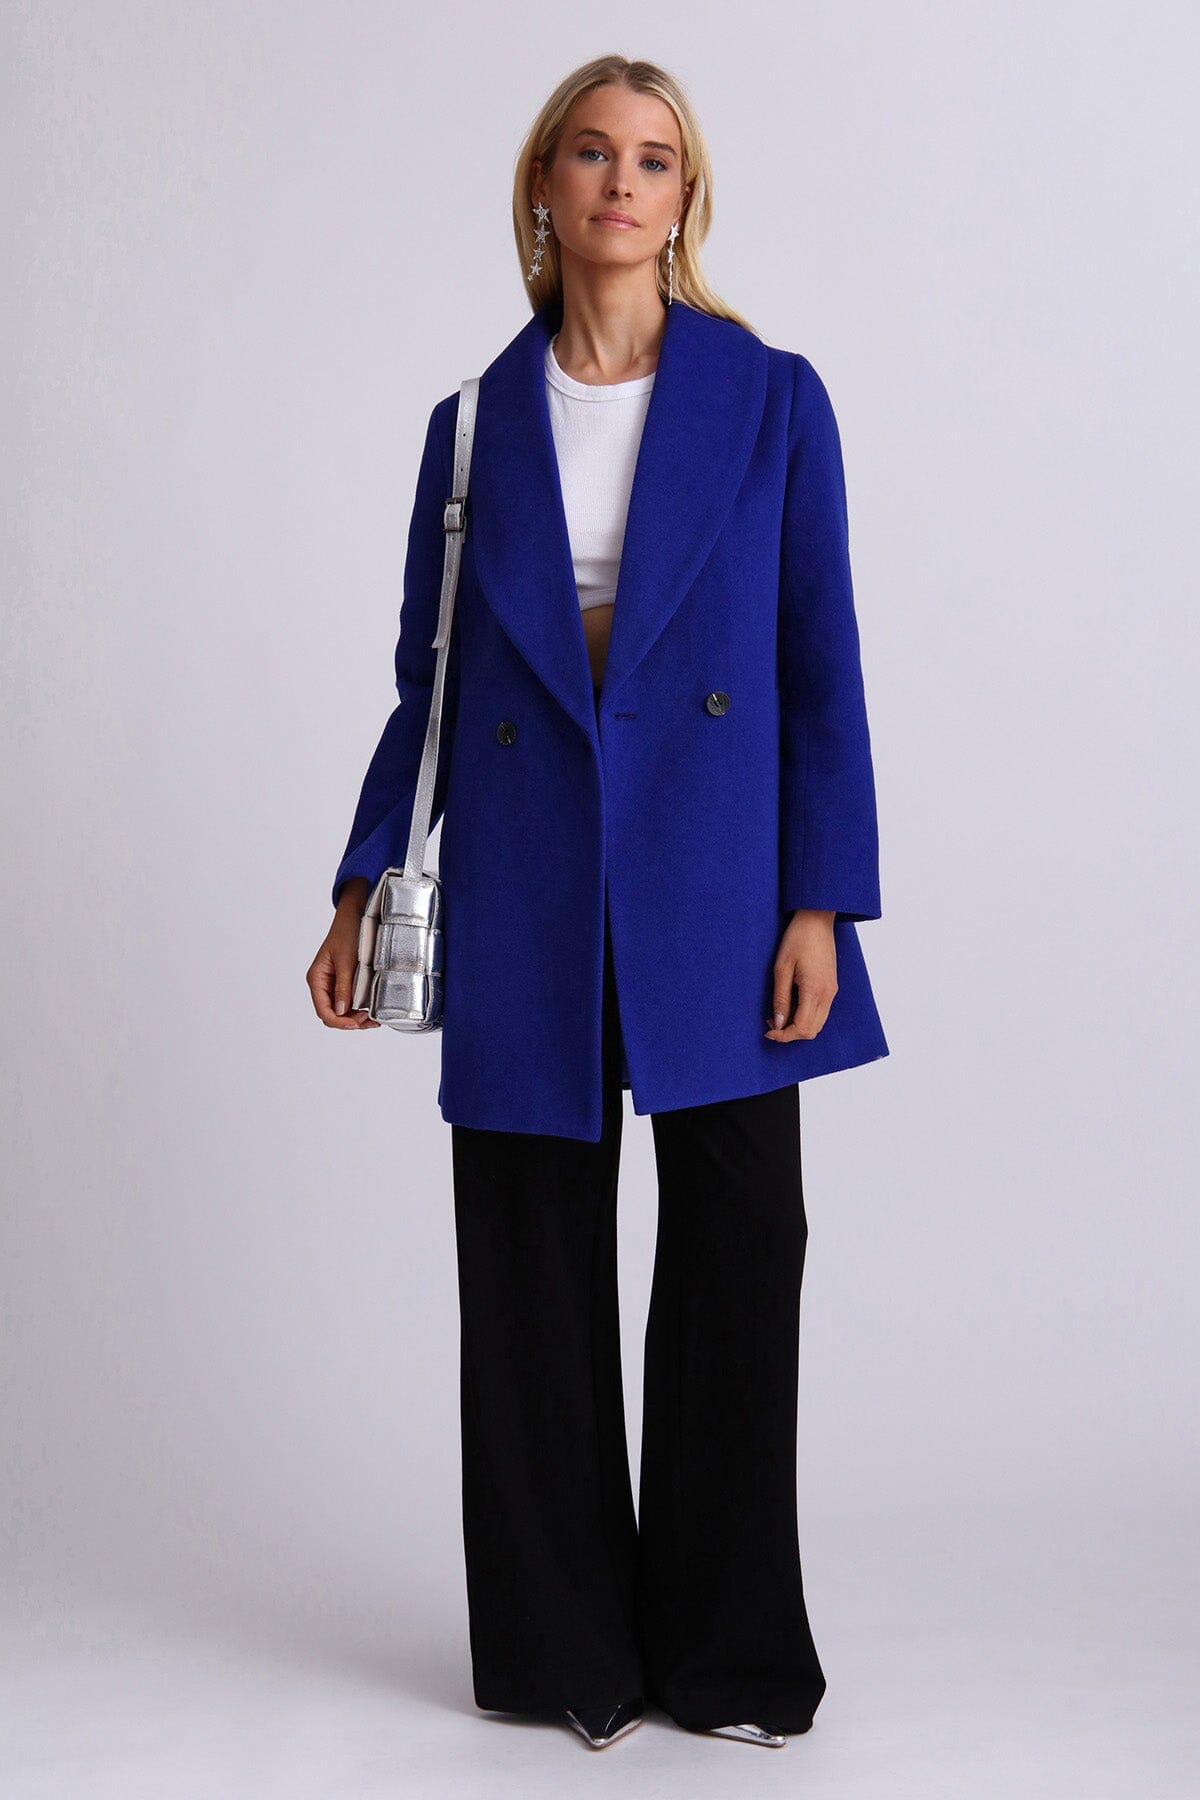 Cobalt blue twill wool blend shawl collar peacoat coat jacket - women's figure flattering fashion outerwear for fall 2023